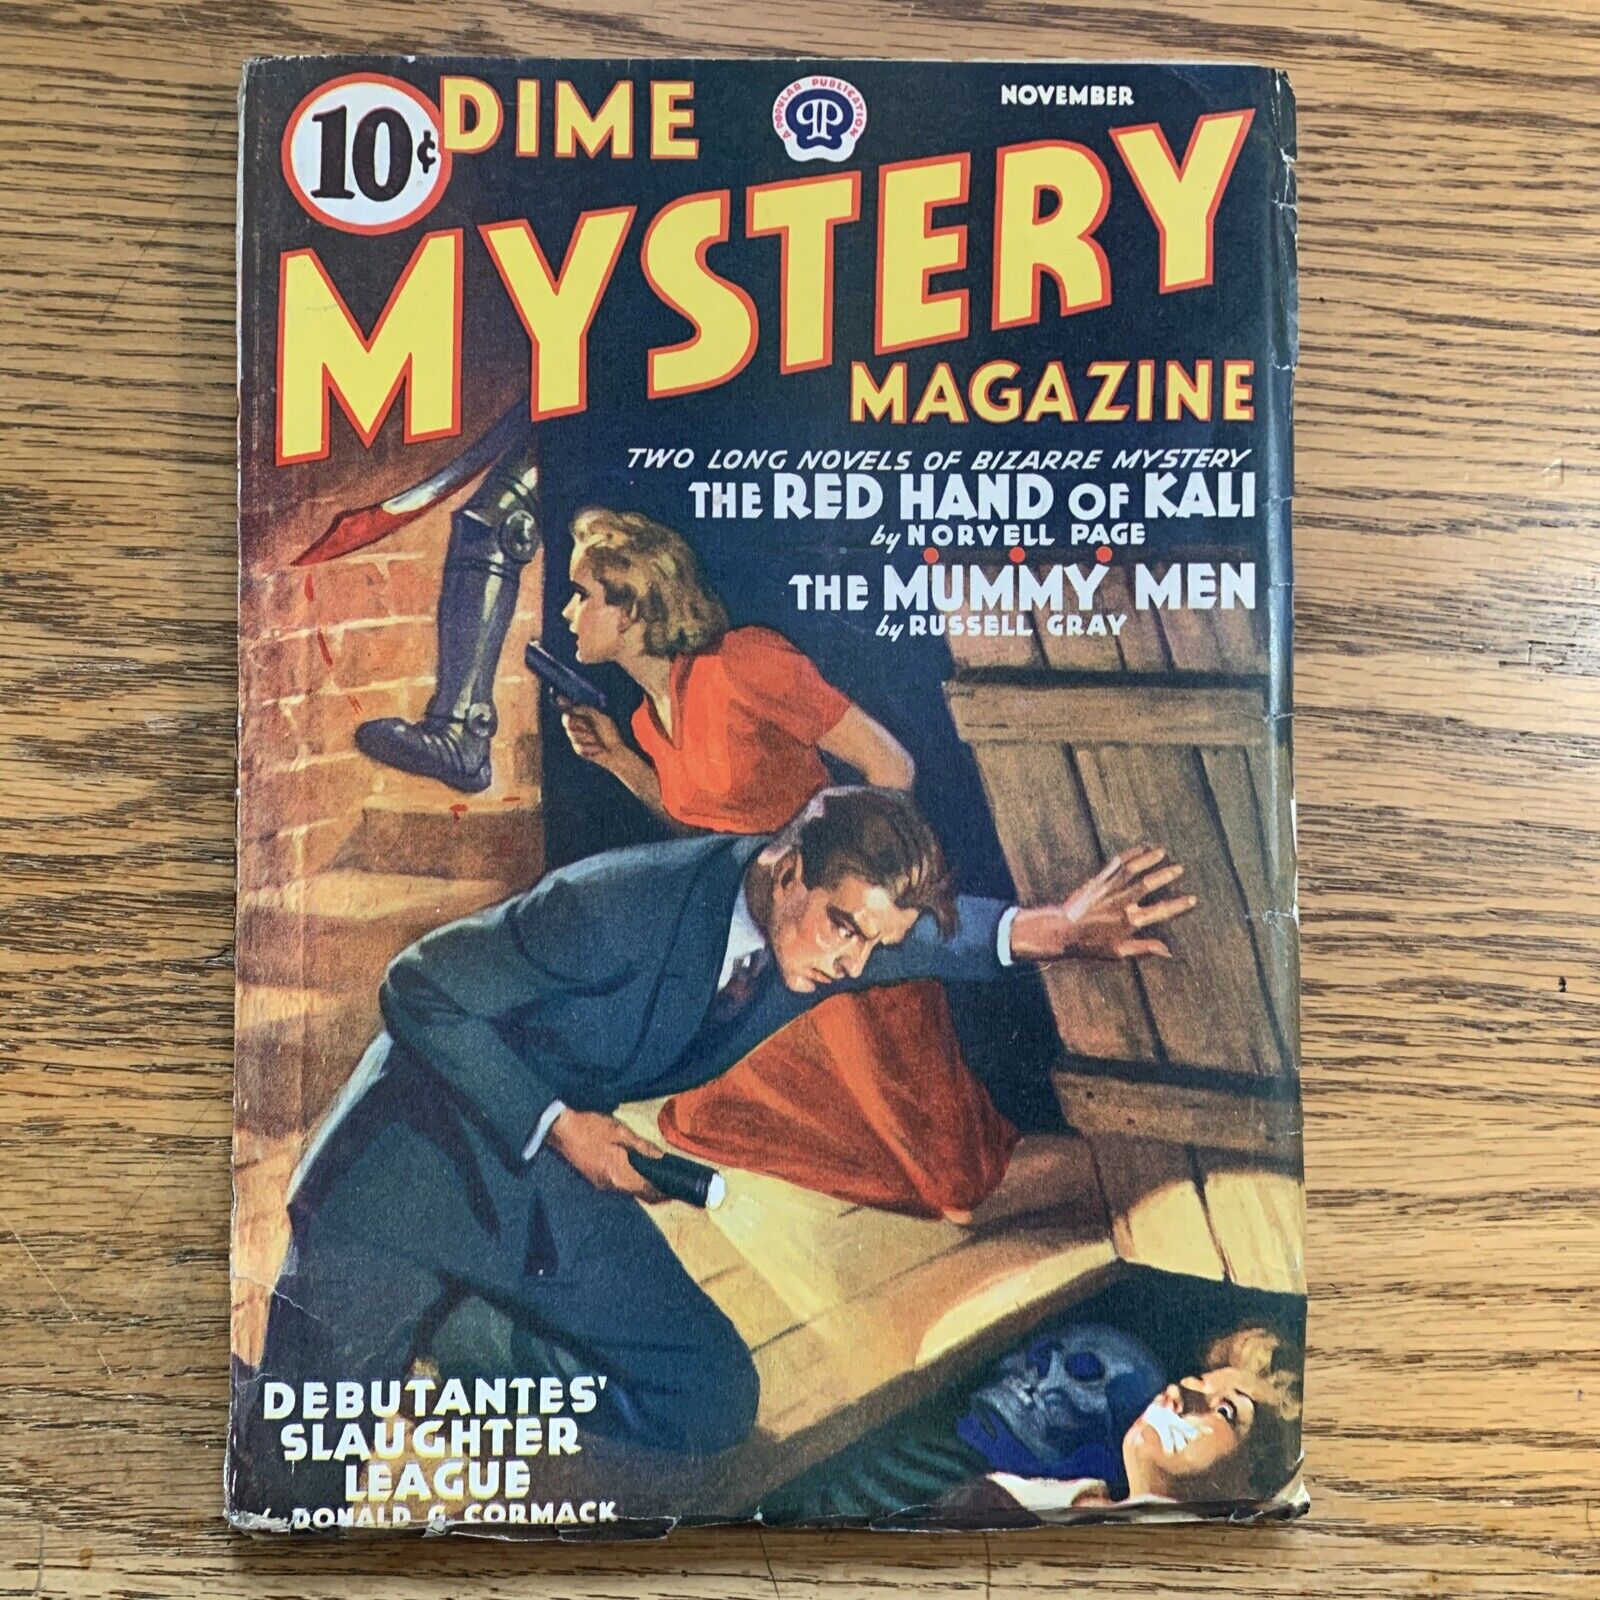 DIME MYSTERY MAGAZINE November 1940 Vintage Pulp Magazine